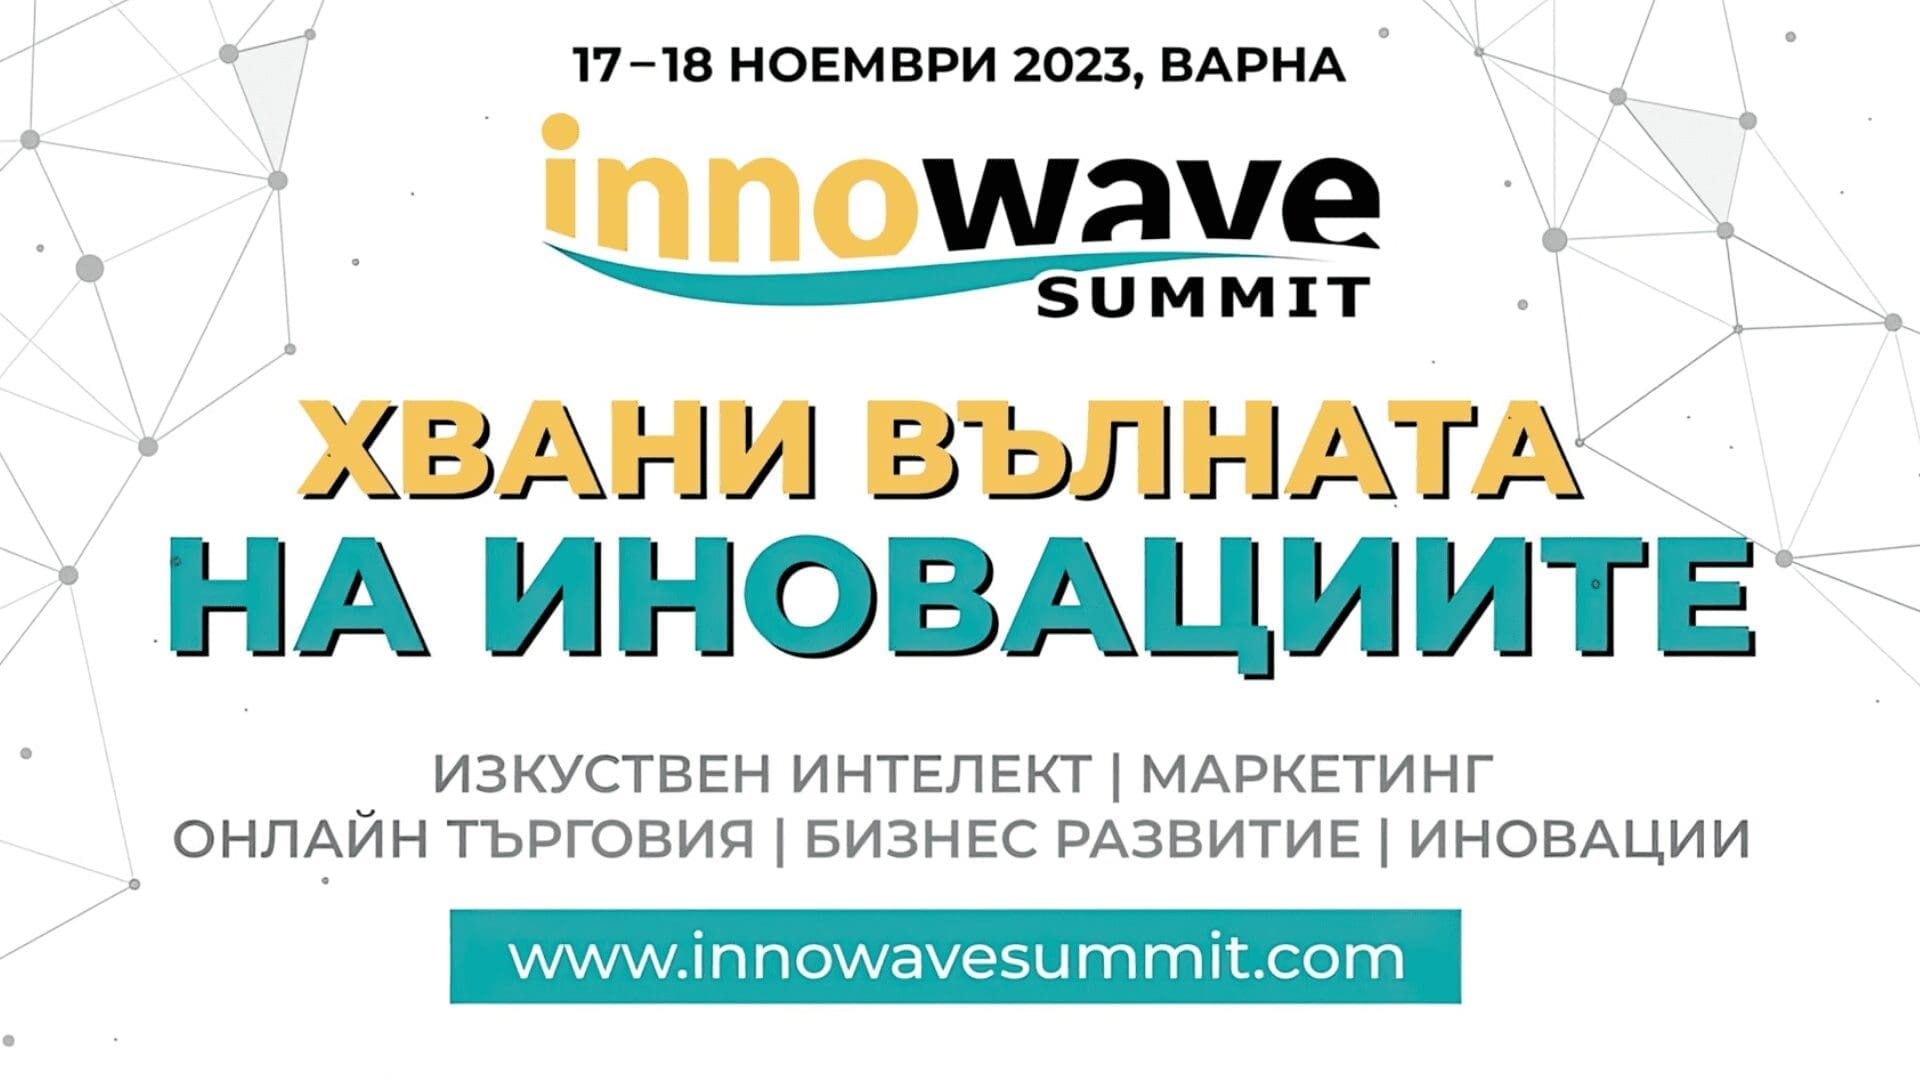 Innowave Summit 2023